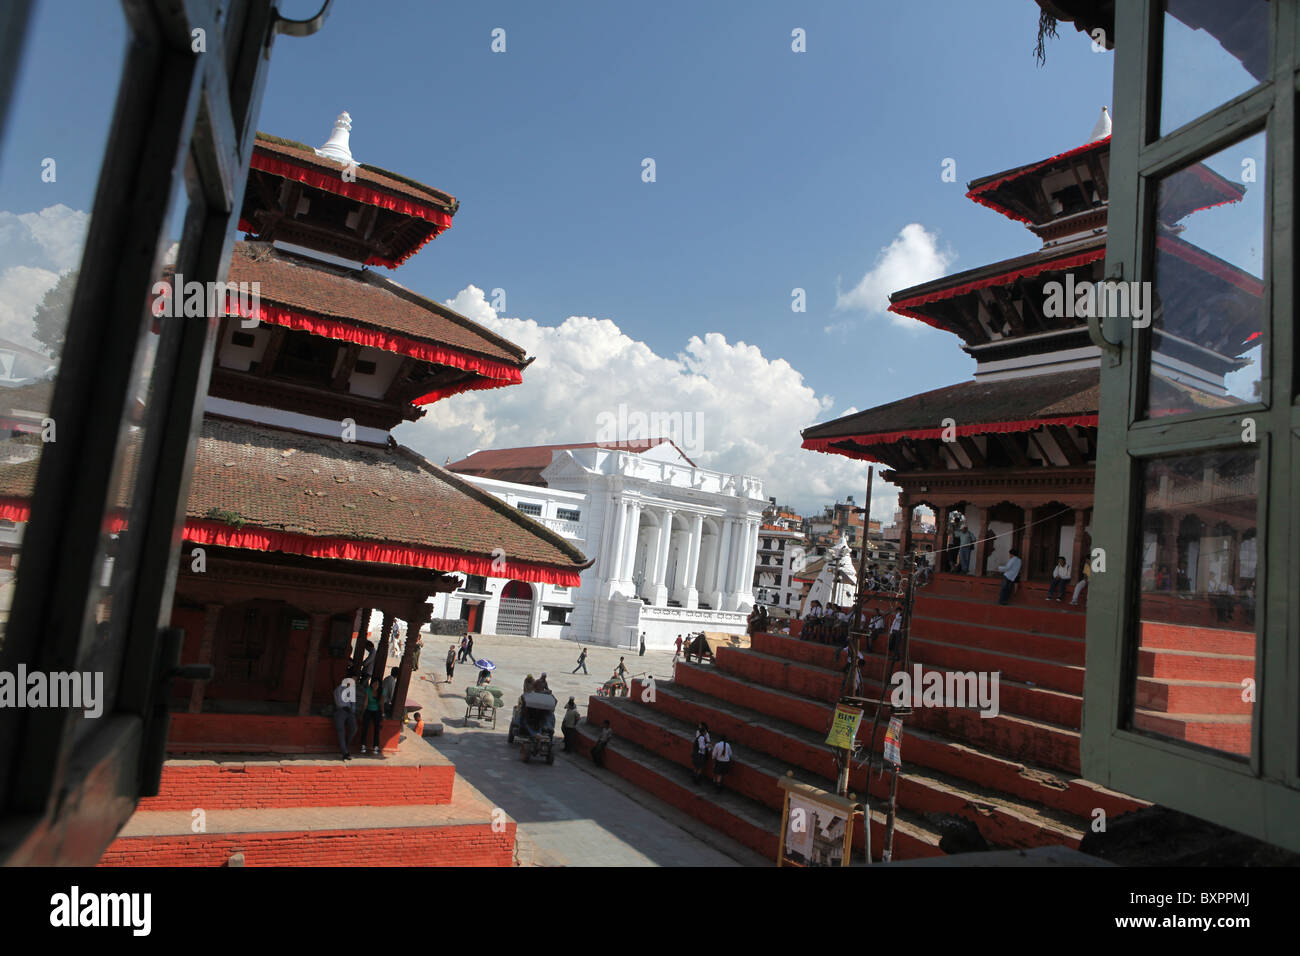 View of temples in Durbar Sqaure in Kathmandu, Nepal in Asia Stock Photo